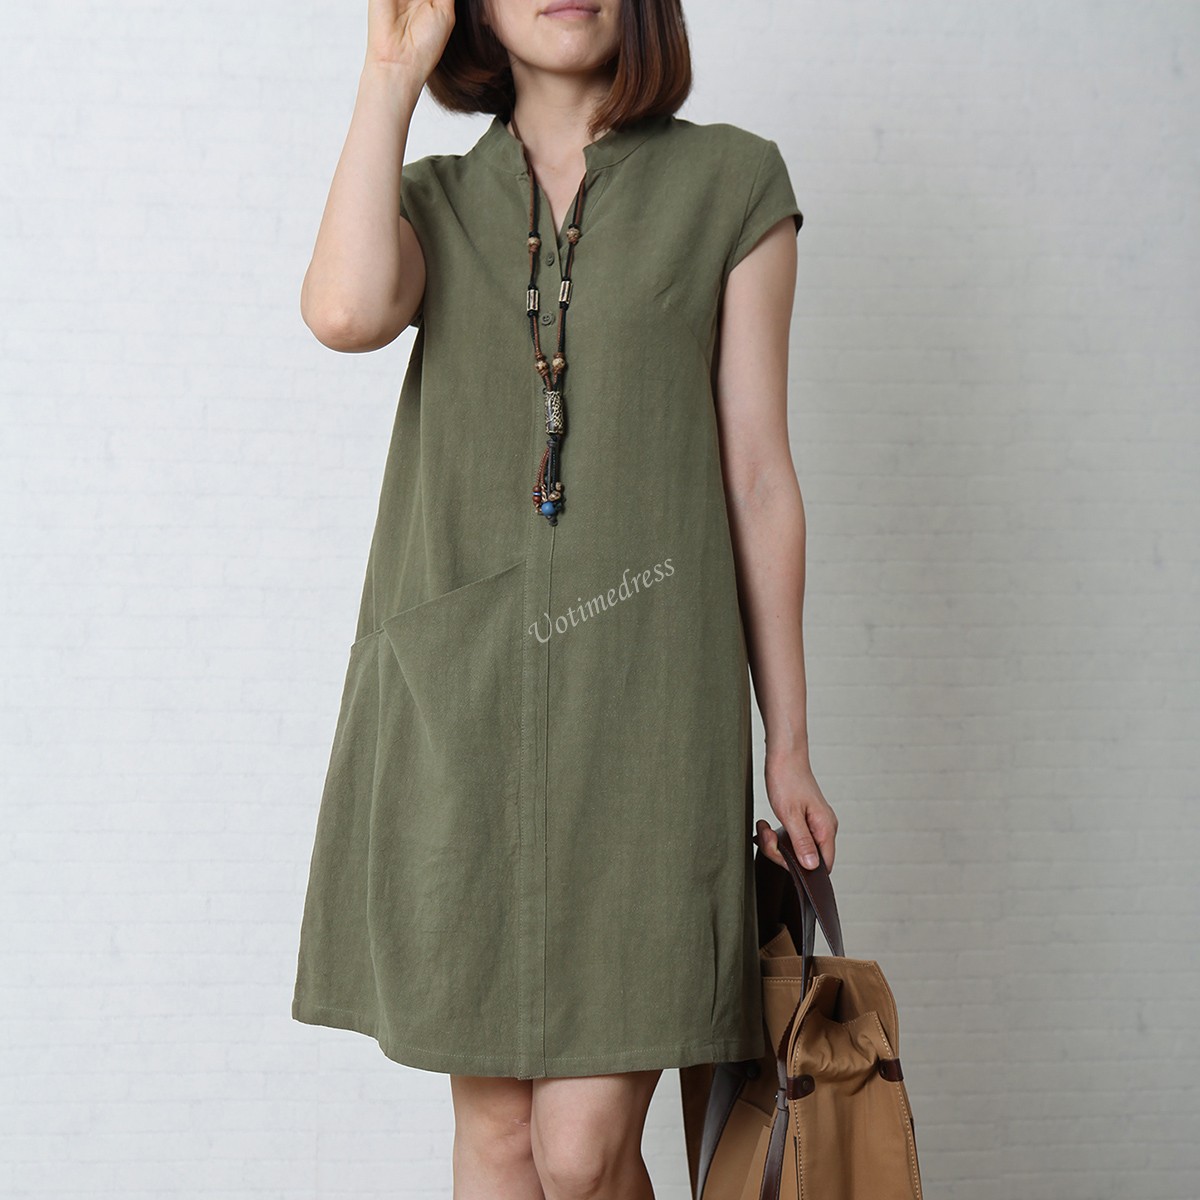 Green Women's Sundress Loose Cotton Linen Dress V-Neck 4 Colors